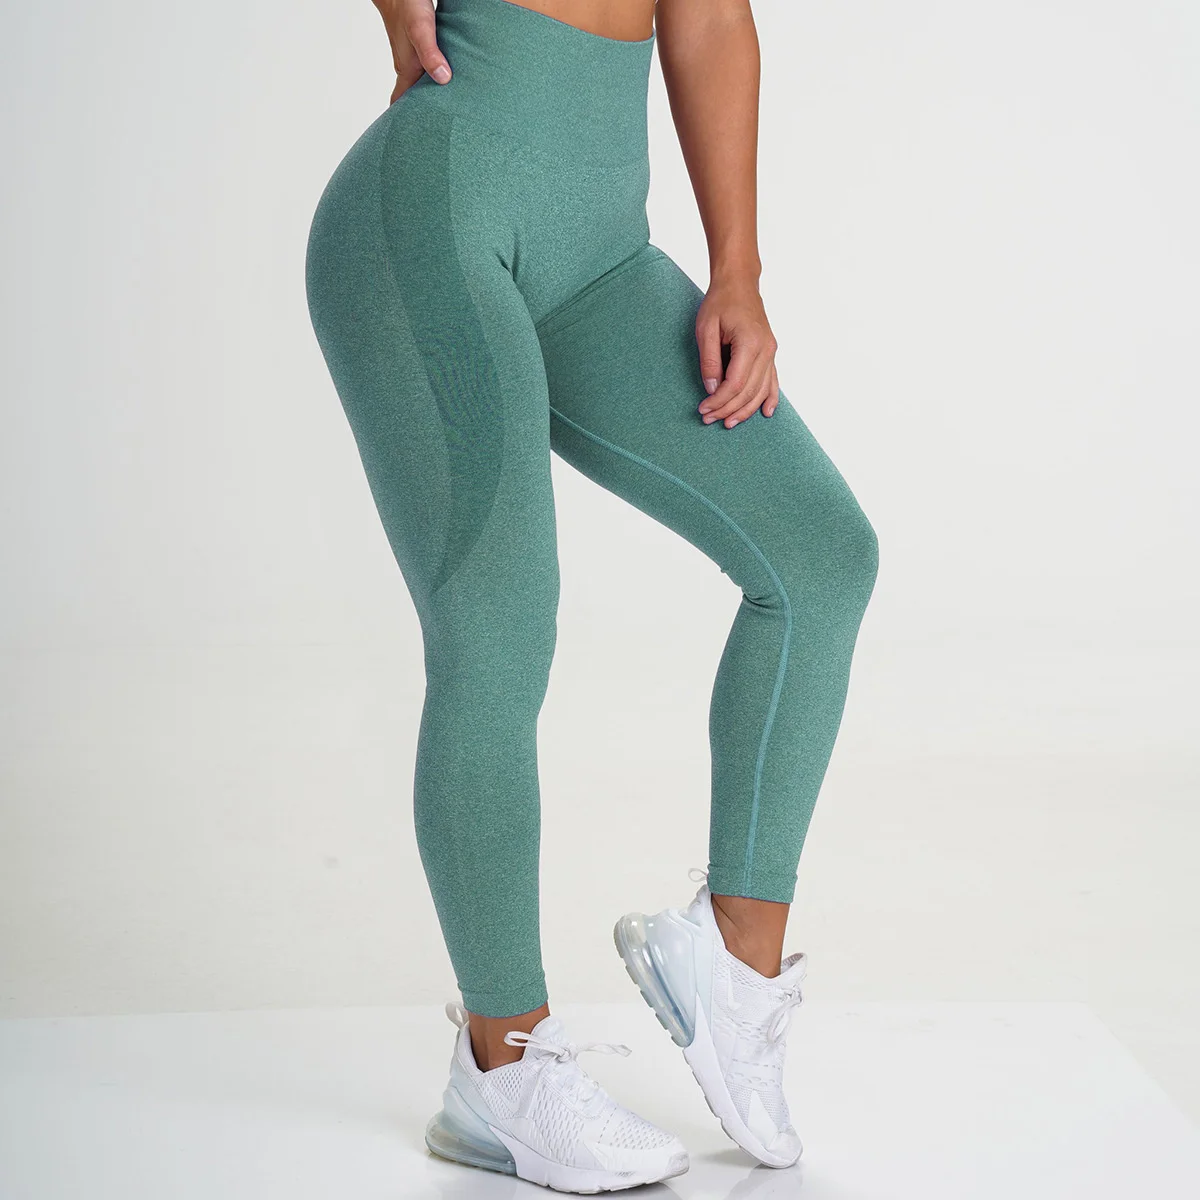 

SVOKOR Bubble Butt Leggings Women Push Up Anti Cellulit Ultra Thin Fitness Legins Workout Gym Legging High Waist Pants Dropship